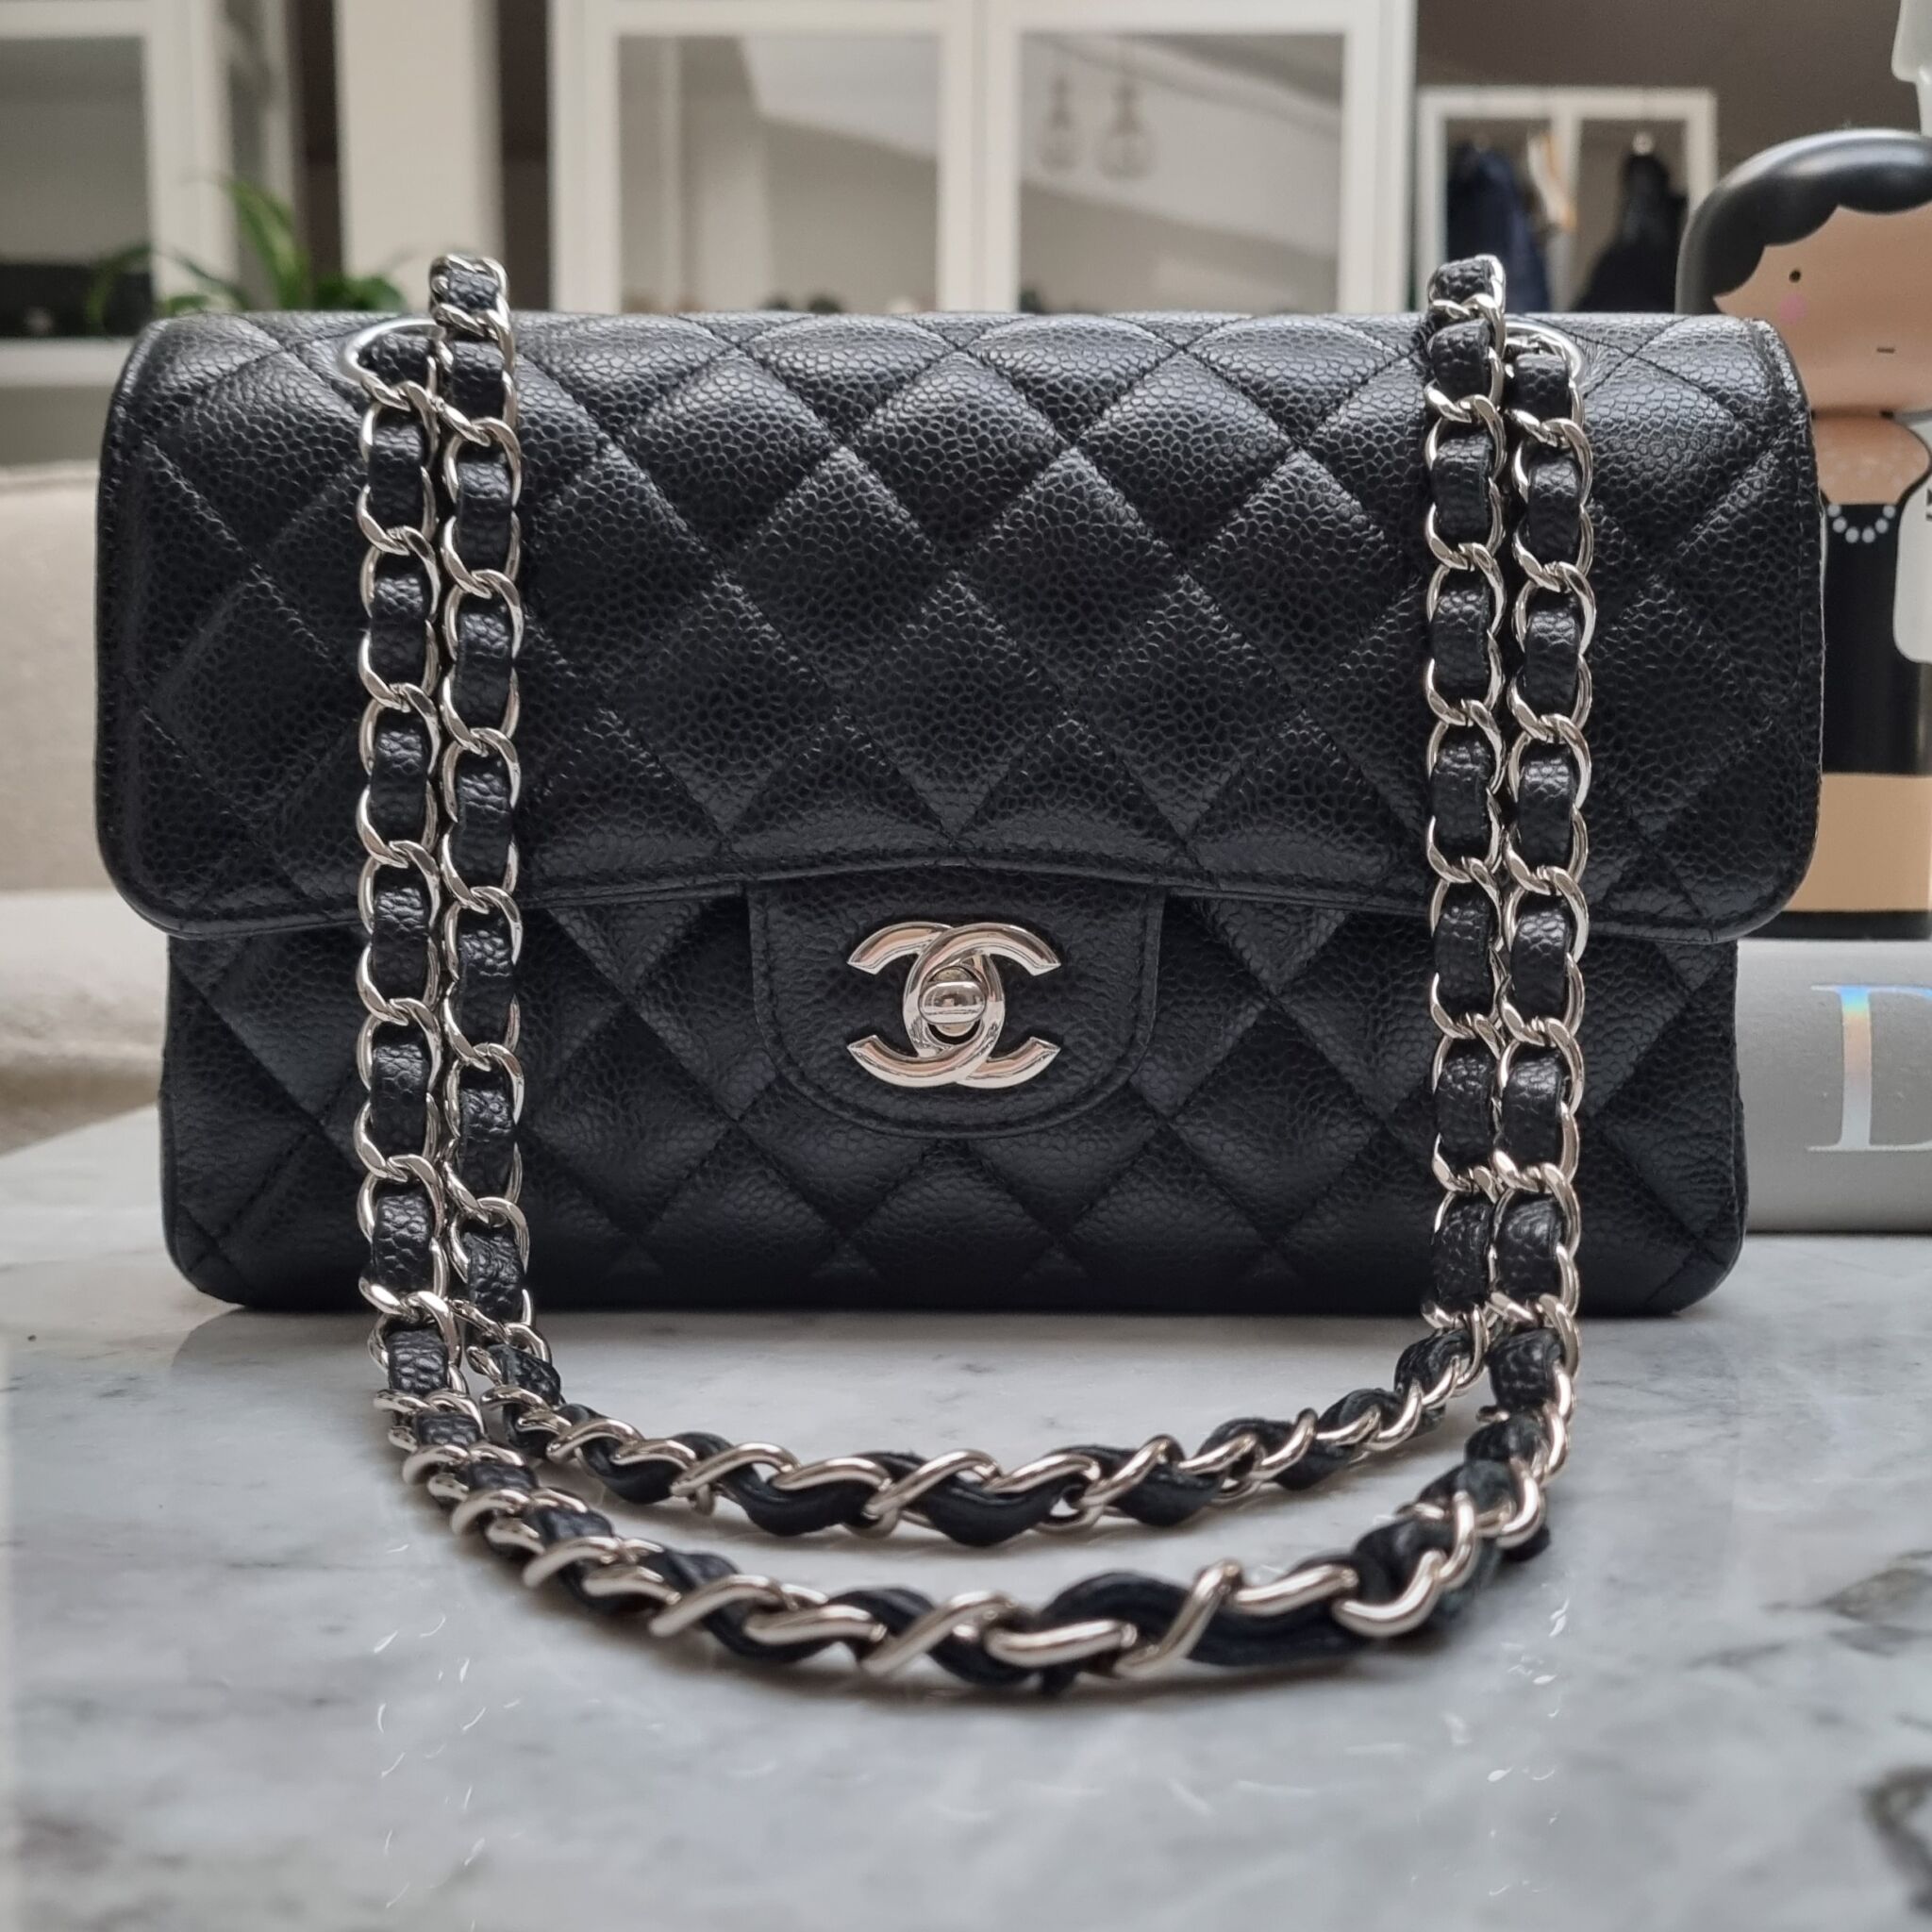 Chanel Small Classic Flap, Caviar, Black SHW - Laulay Luxury